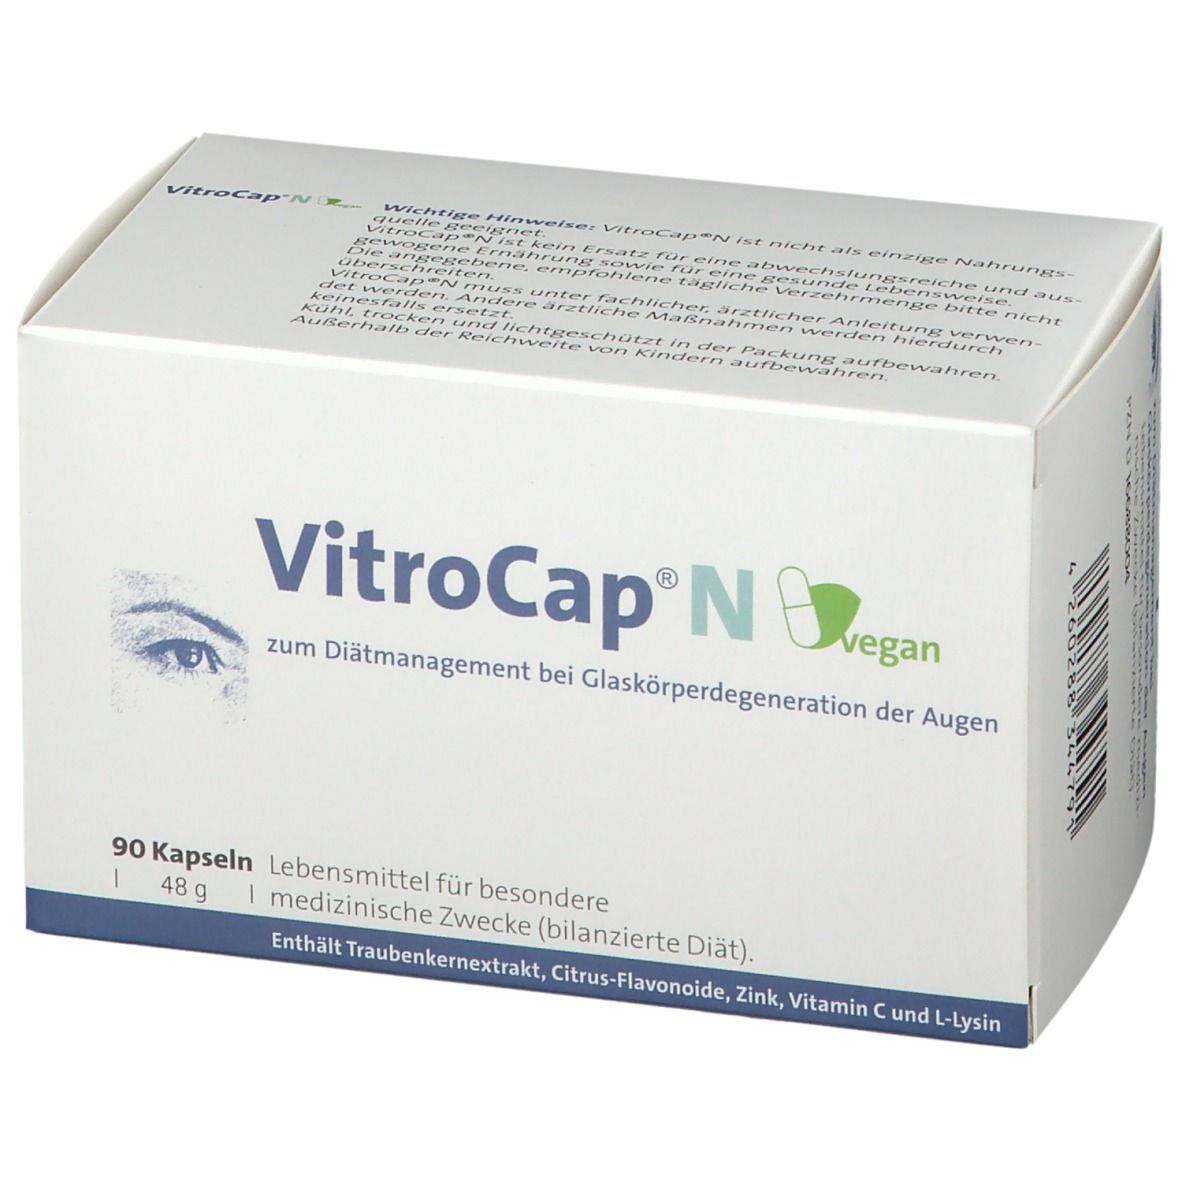 VitroCap® N vegan